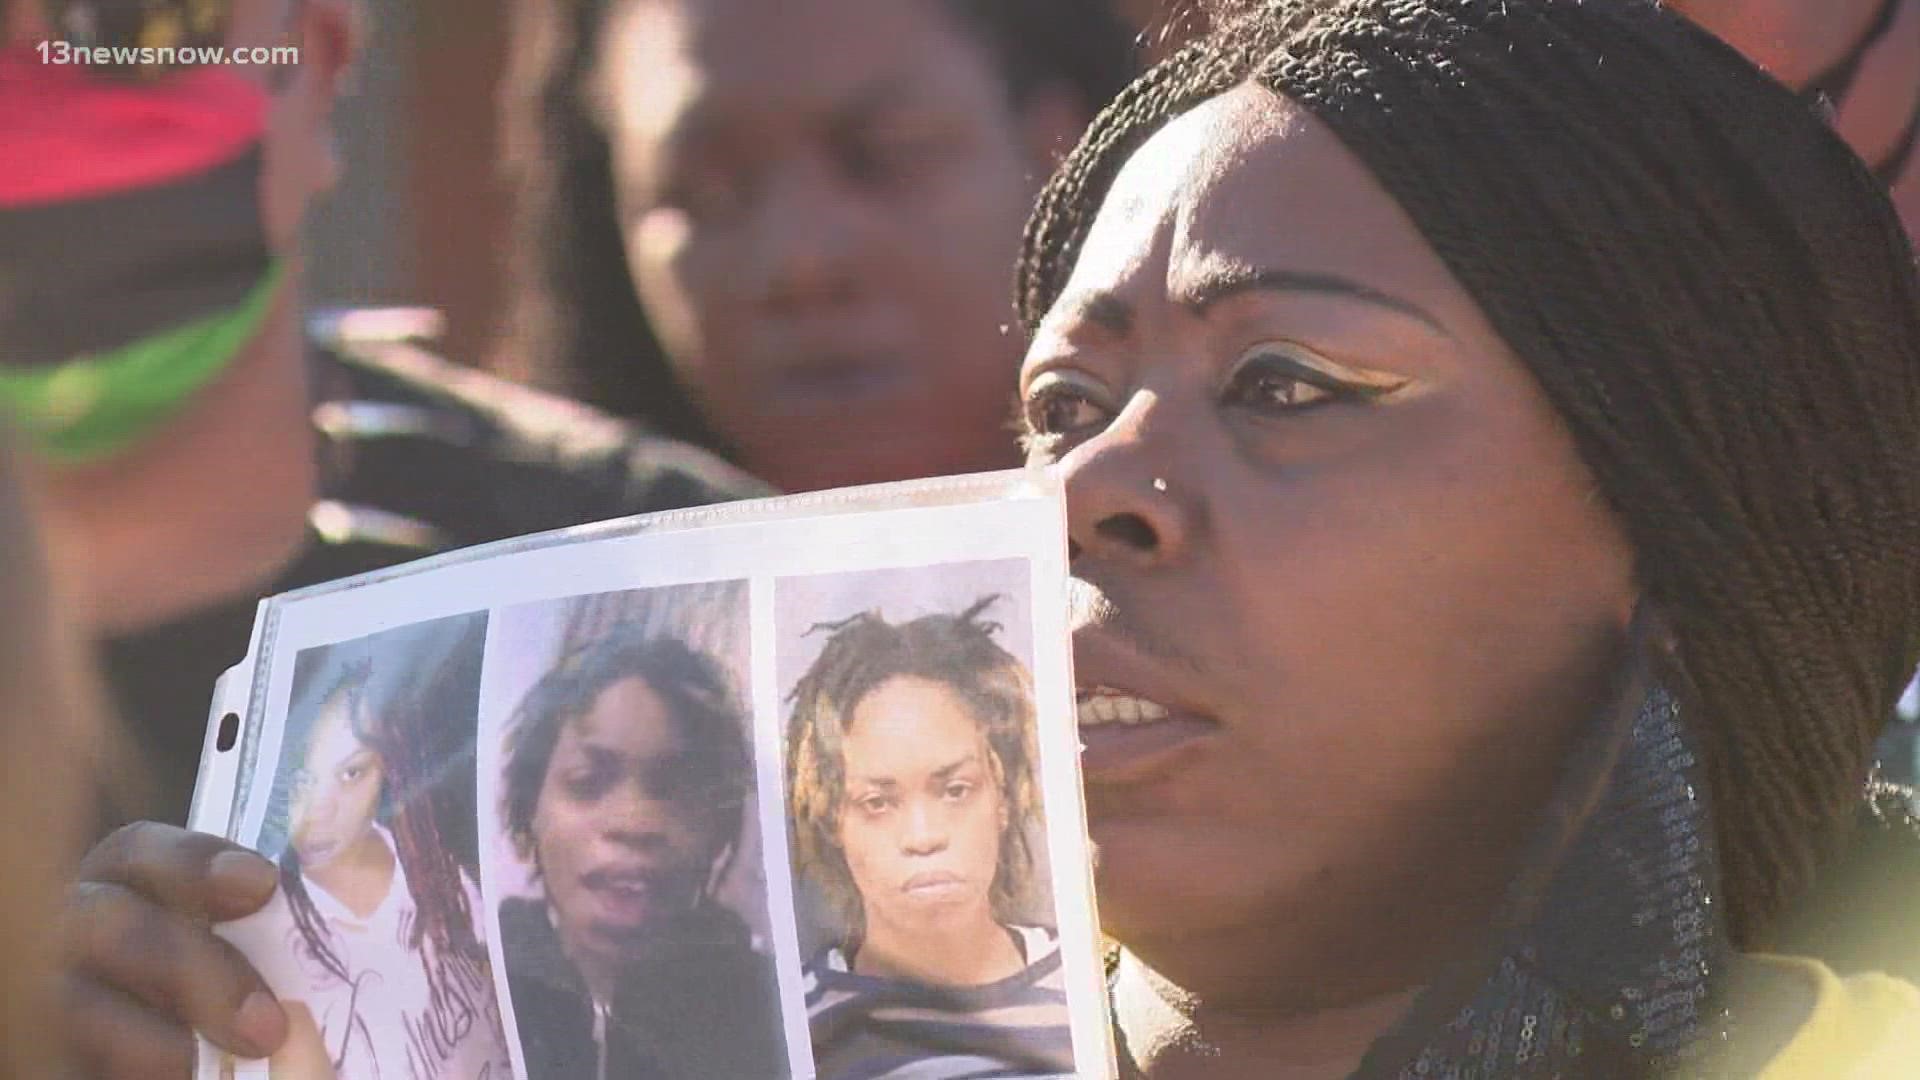 Thirty-year-old Ty’Nesha Taylor went missing three weeks ago.